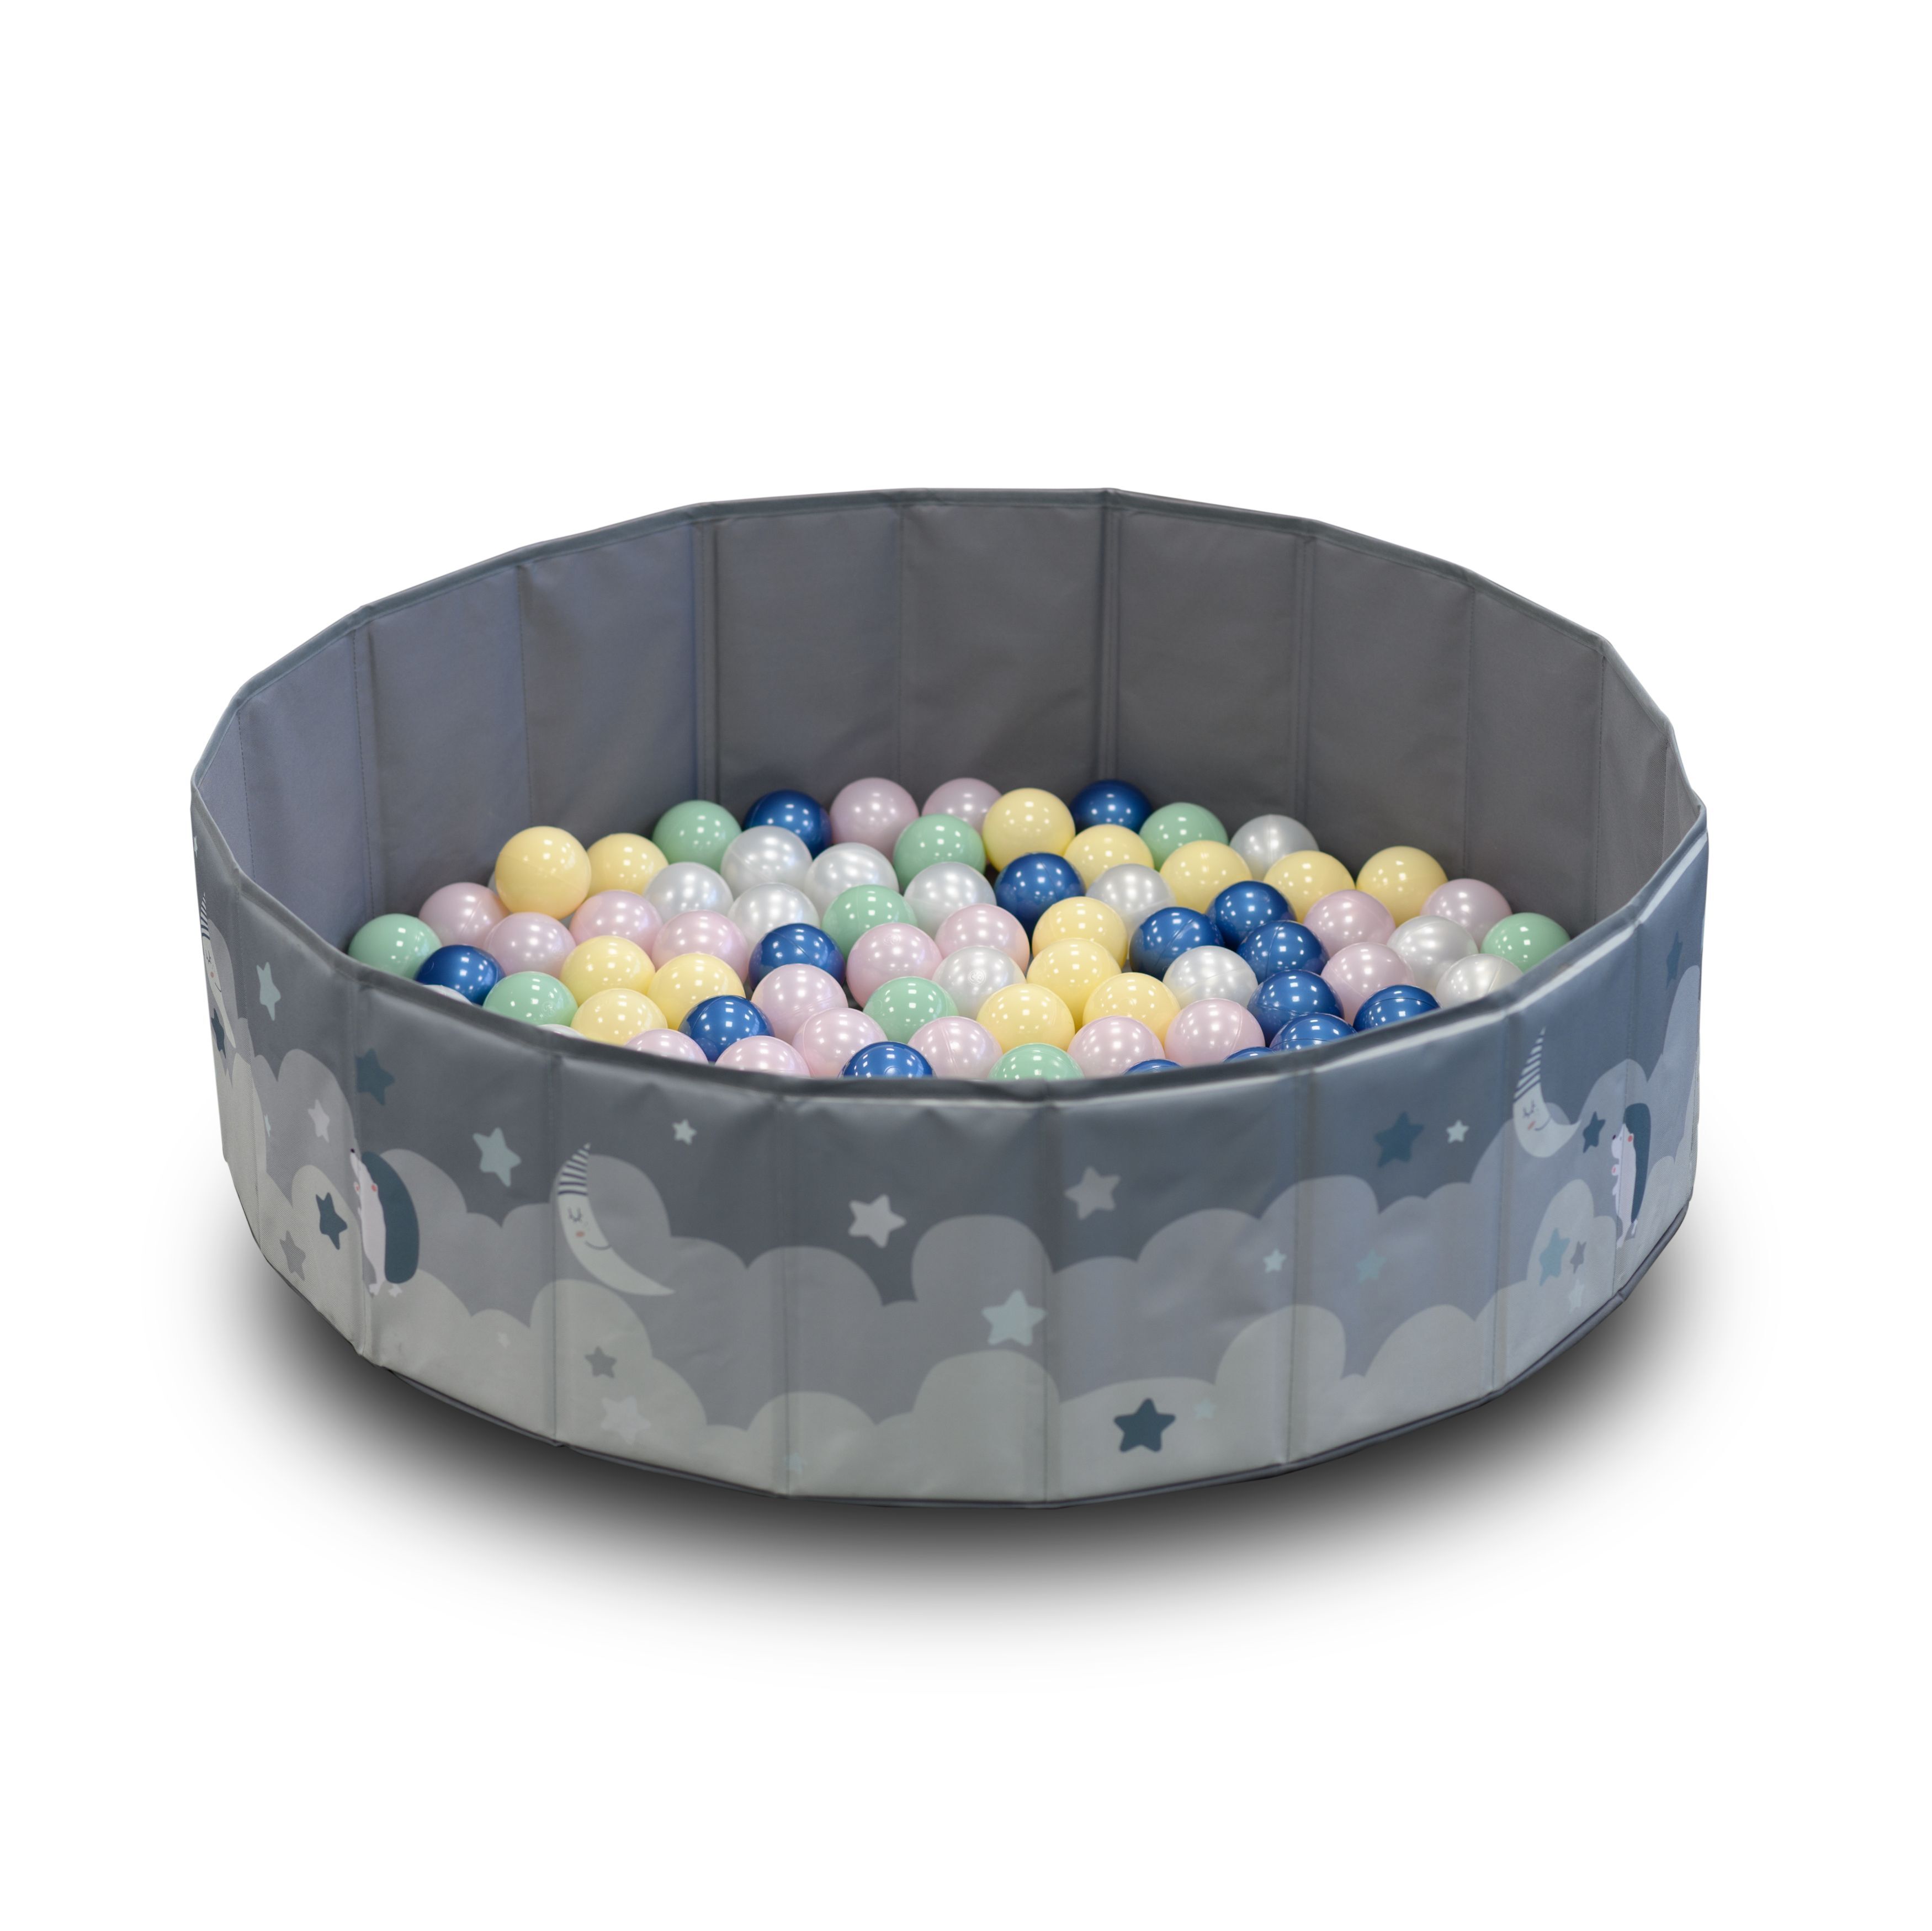 Детский сухой бассейн UNIX Kids Moon Grey, 150 шариков 5 цветов, складной, 100 см детский сухой бассейн romana airpool max дмф мк 02 54 02 голубой без шариков